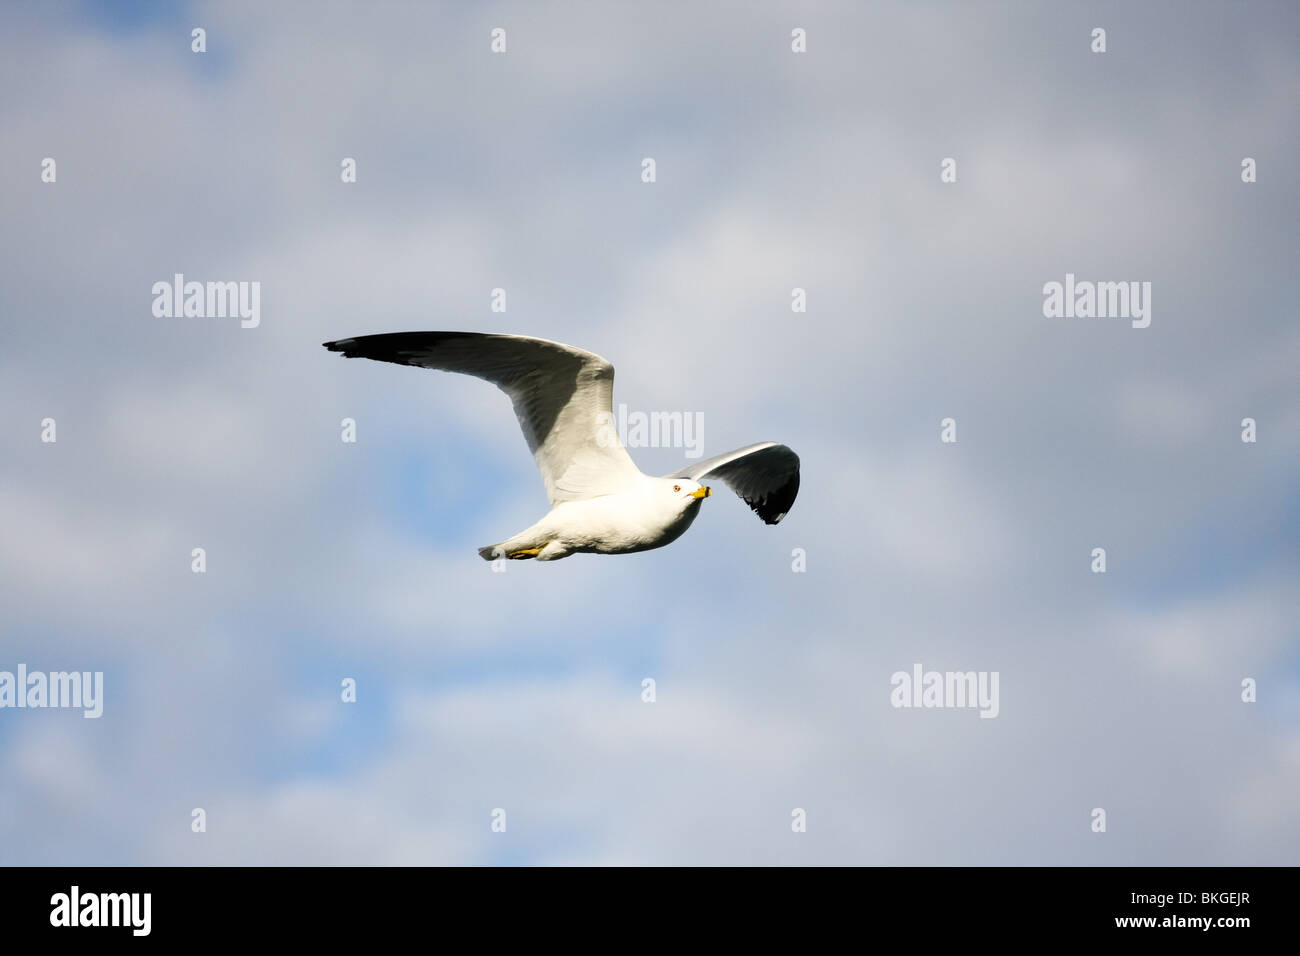 Gaviota gaviota gris blanco pájaro mosca volando vuelo alas de aleta azul cielo nublado soleado Foto de stock